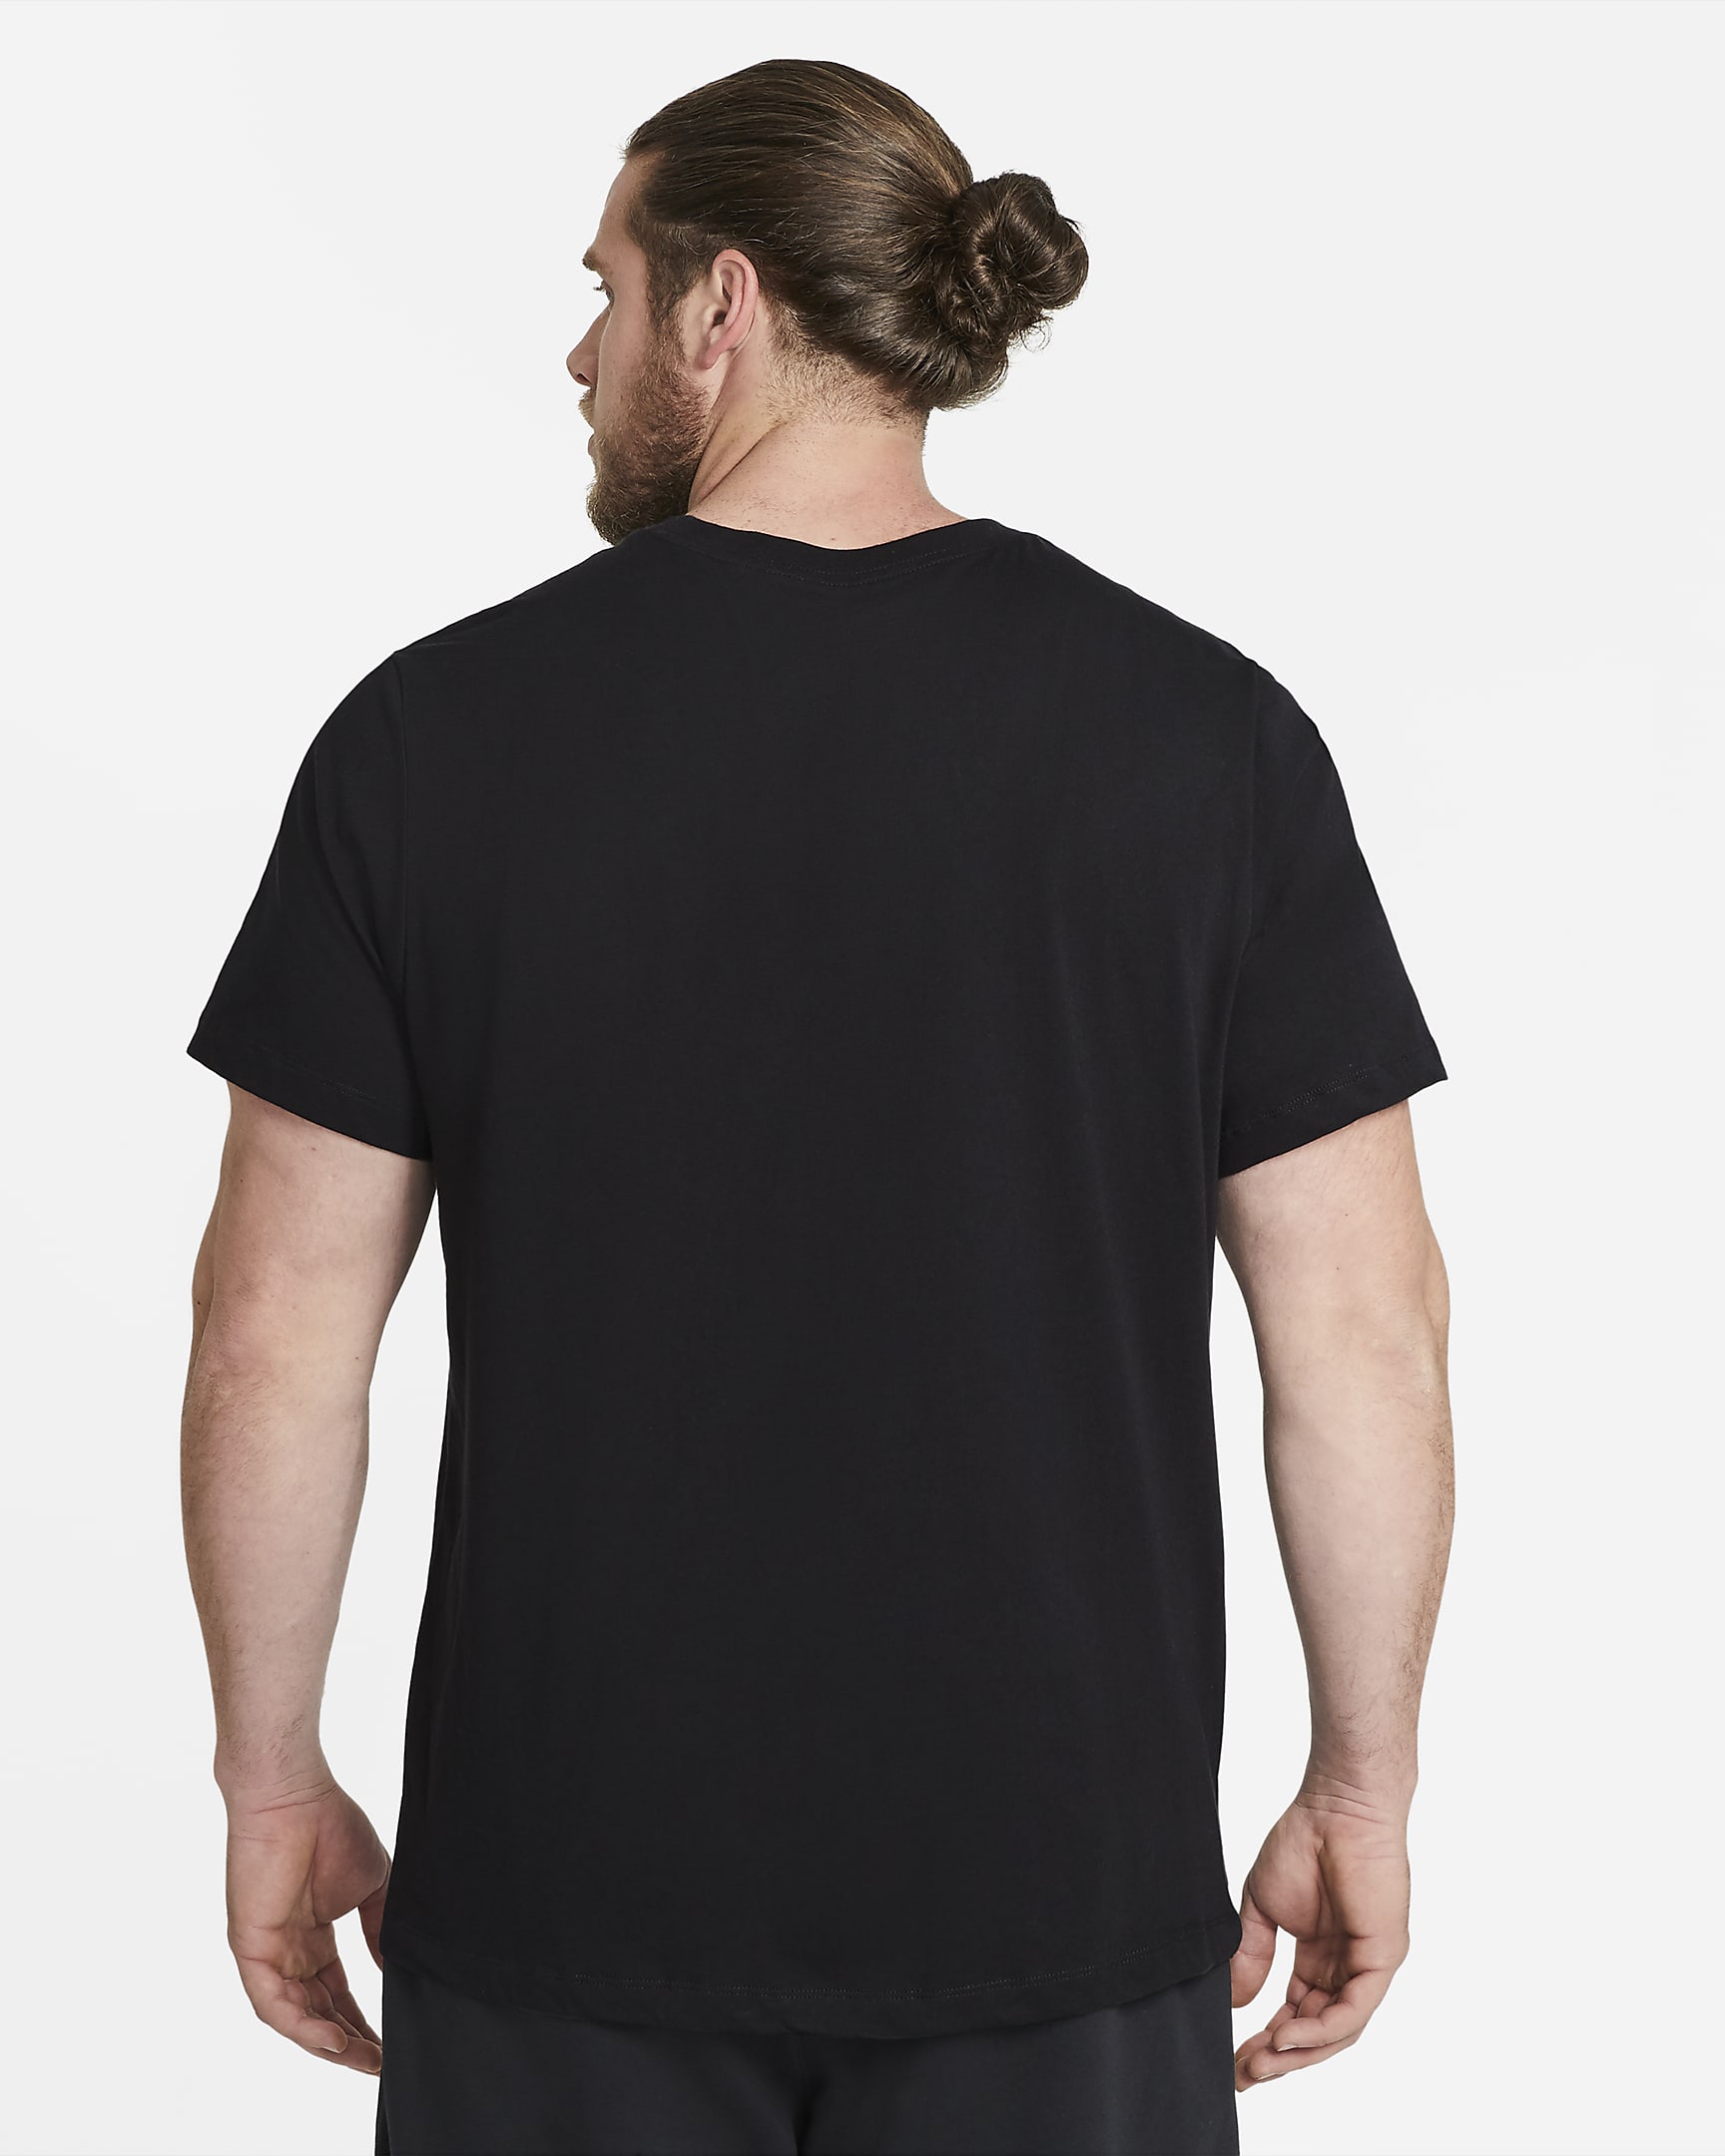 T-shirt Nike Sportswear JDI para homem - Preto/Branco